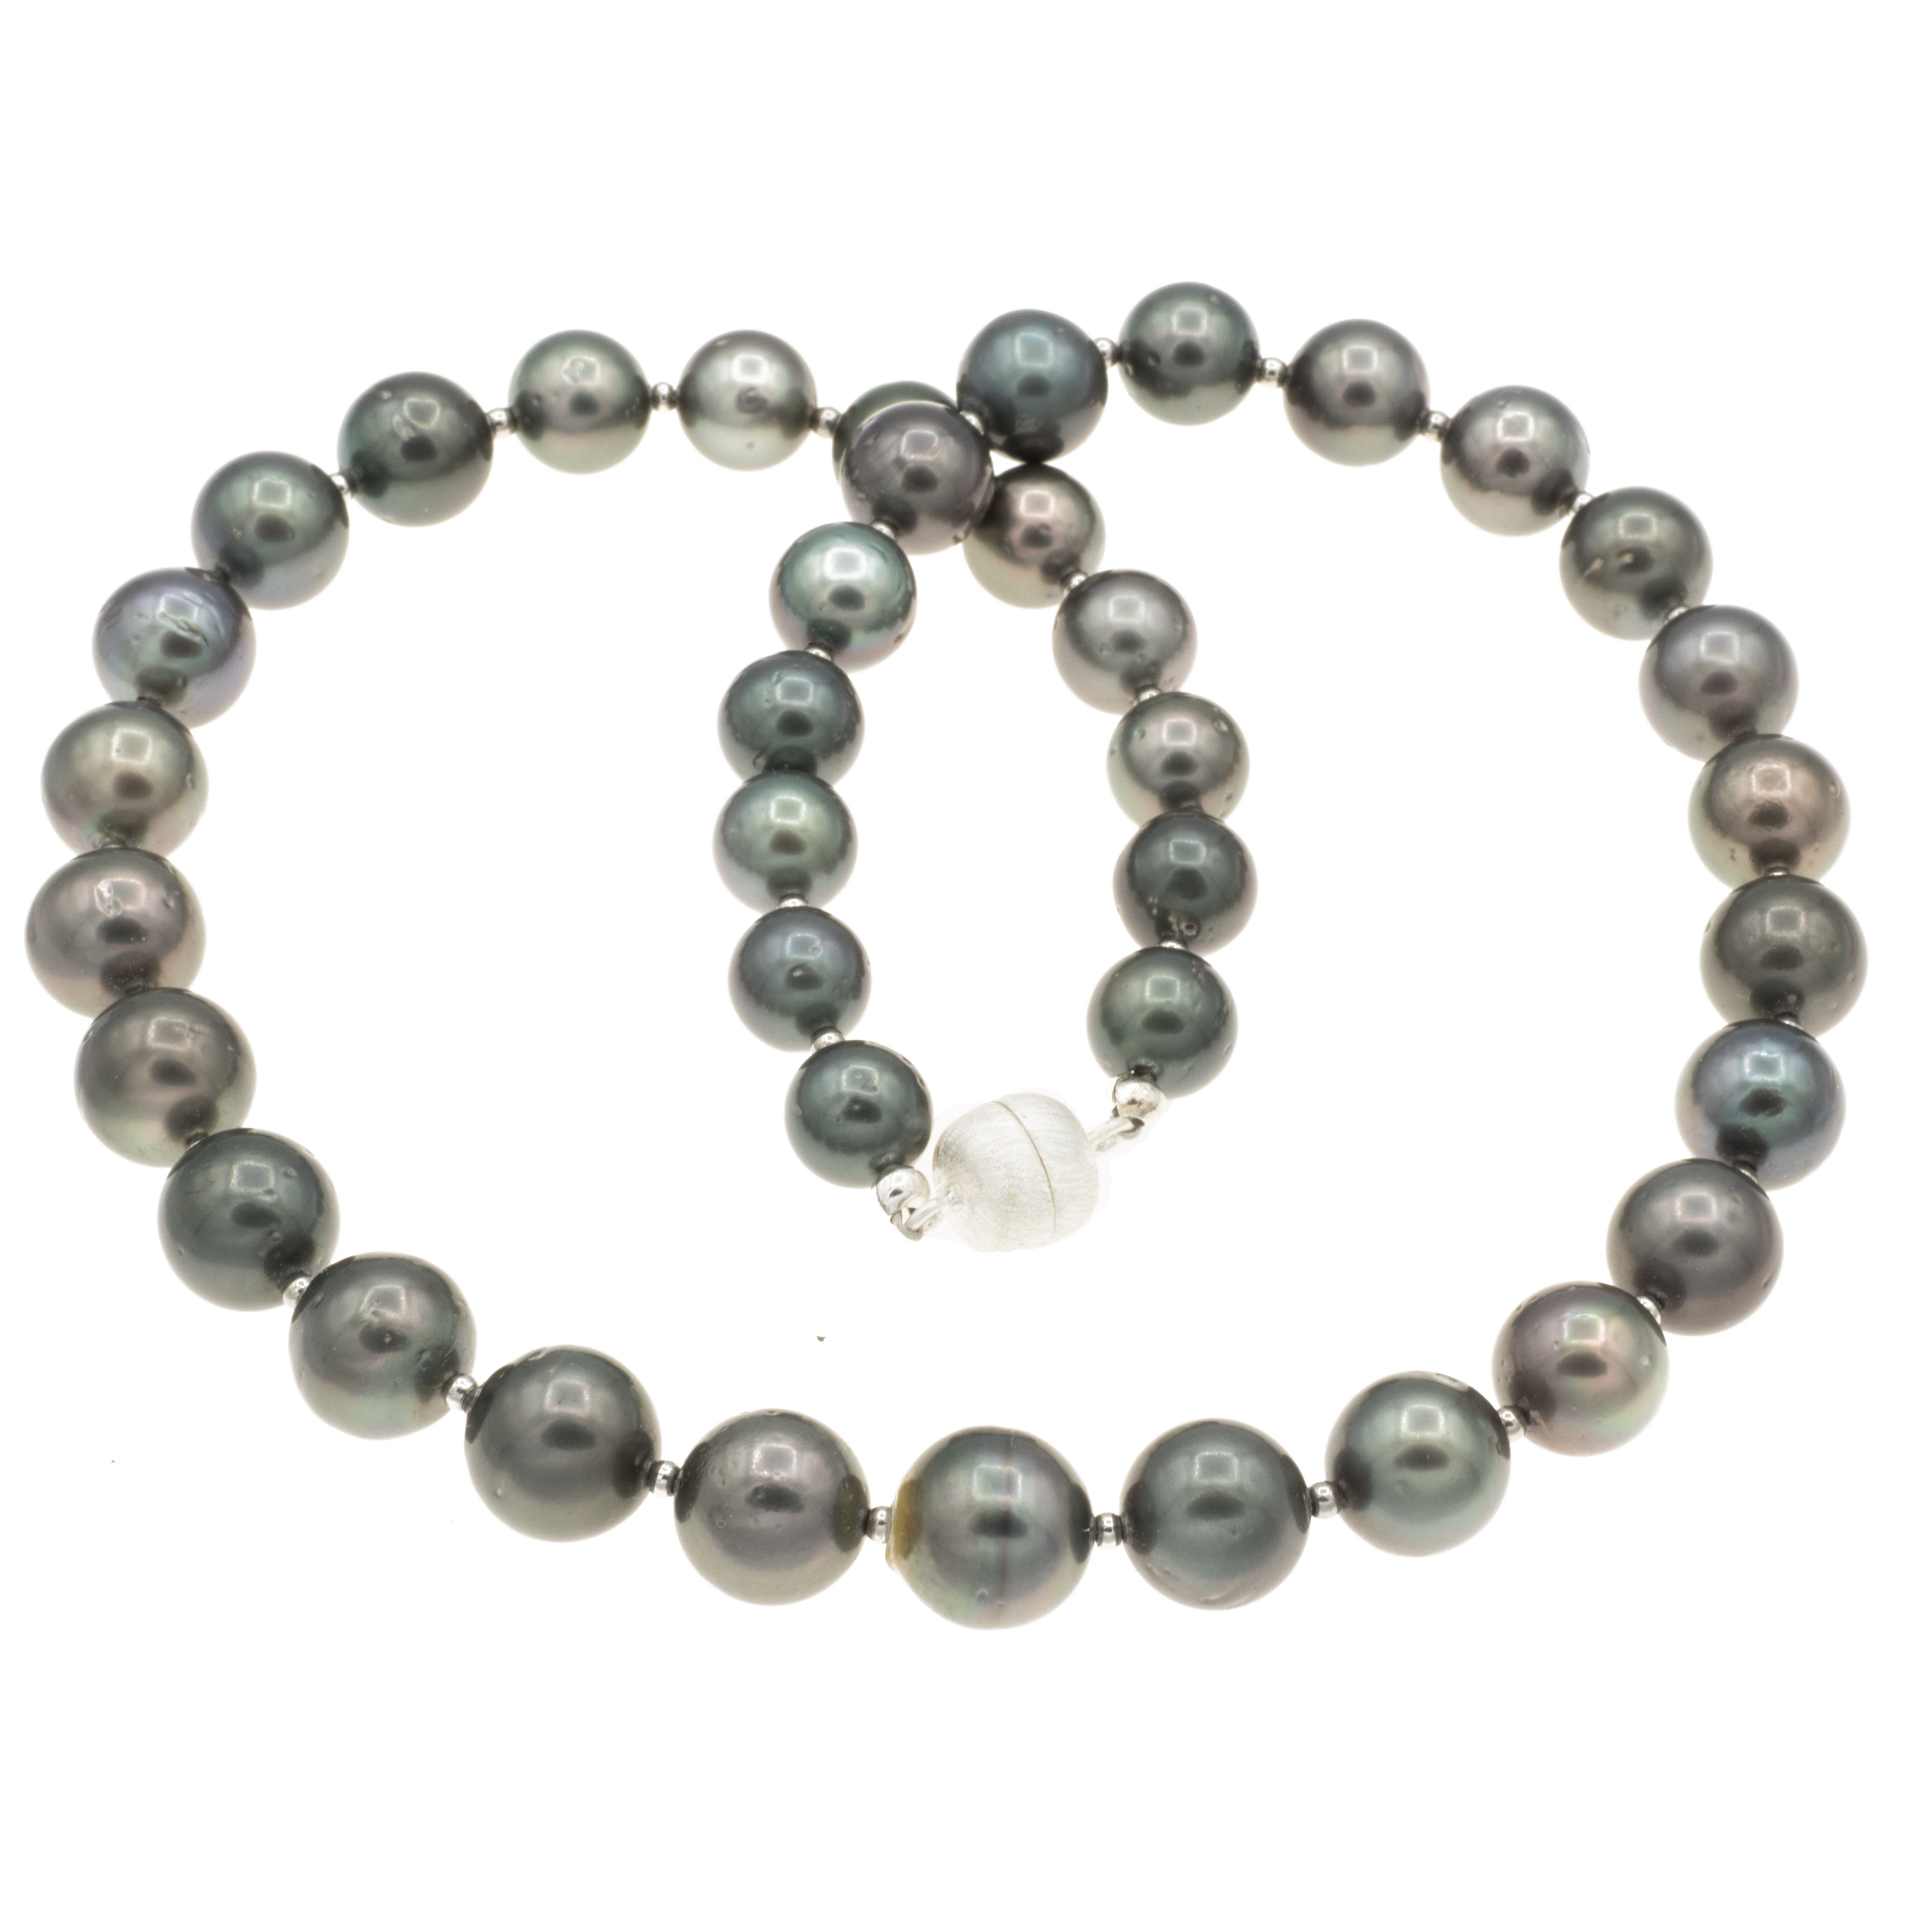 Bella Carina Perlenkette Tahiti Perlen Kette runde Perlen 10 - 12 mm Perlen 50 cm, echte Tahiti Perlen